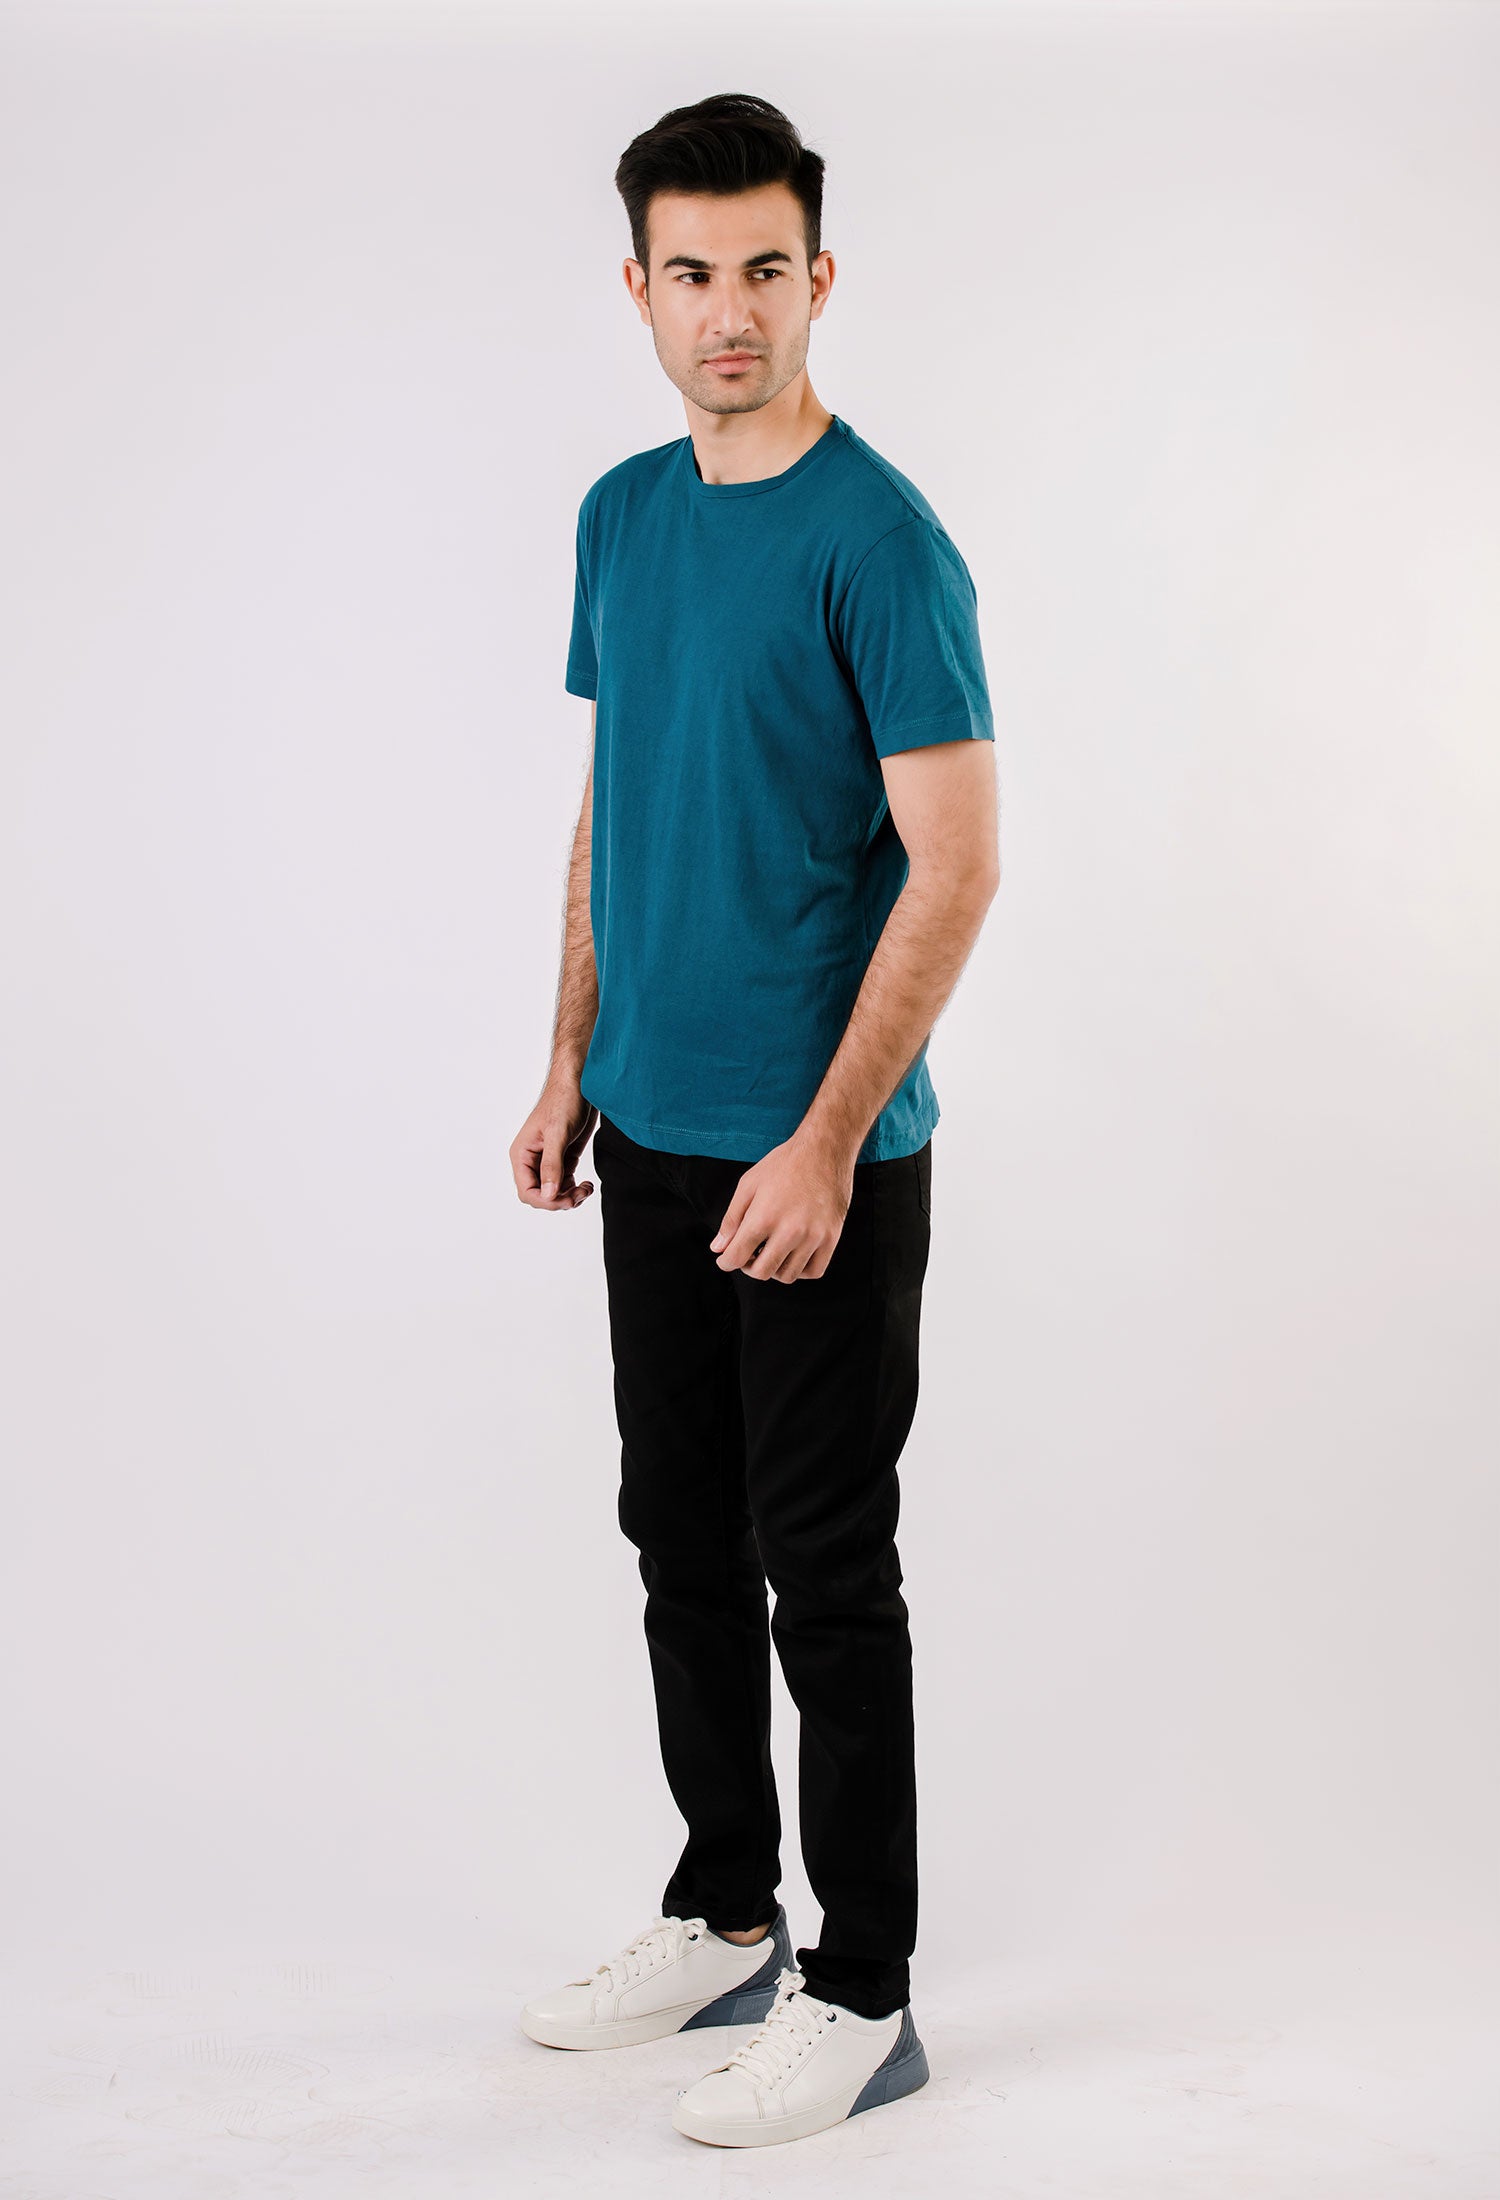 Teal Blue Basic T-Shirt (T-SHB-0001)